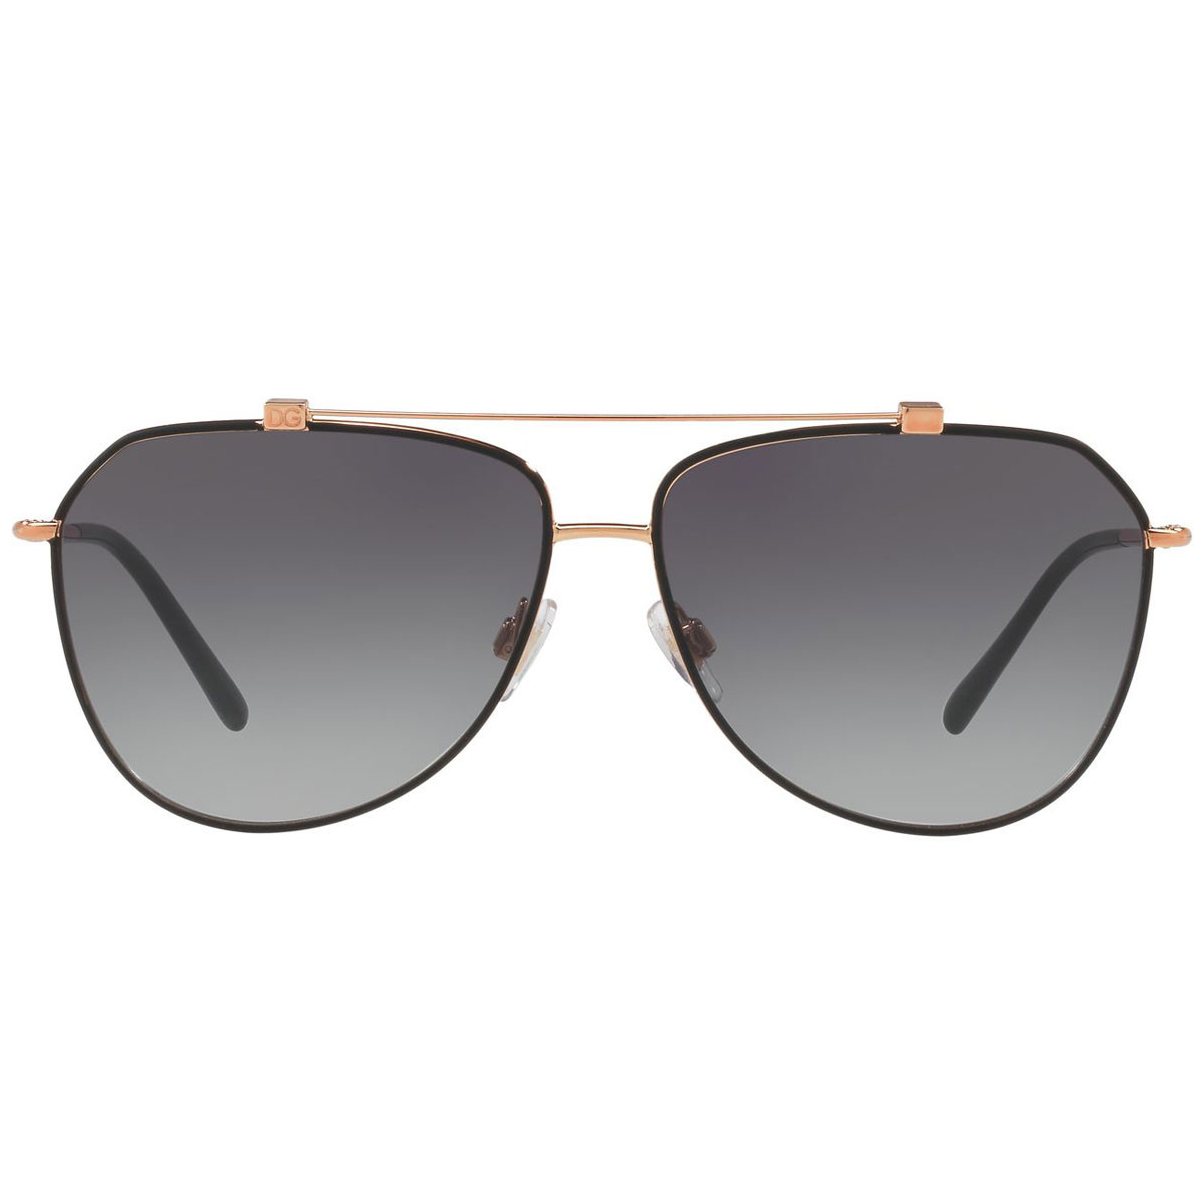 Dolce & Gabbana DG2190 Sunglasses - Purevision - The Sunglasses Shop in ...